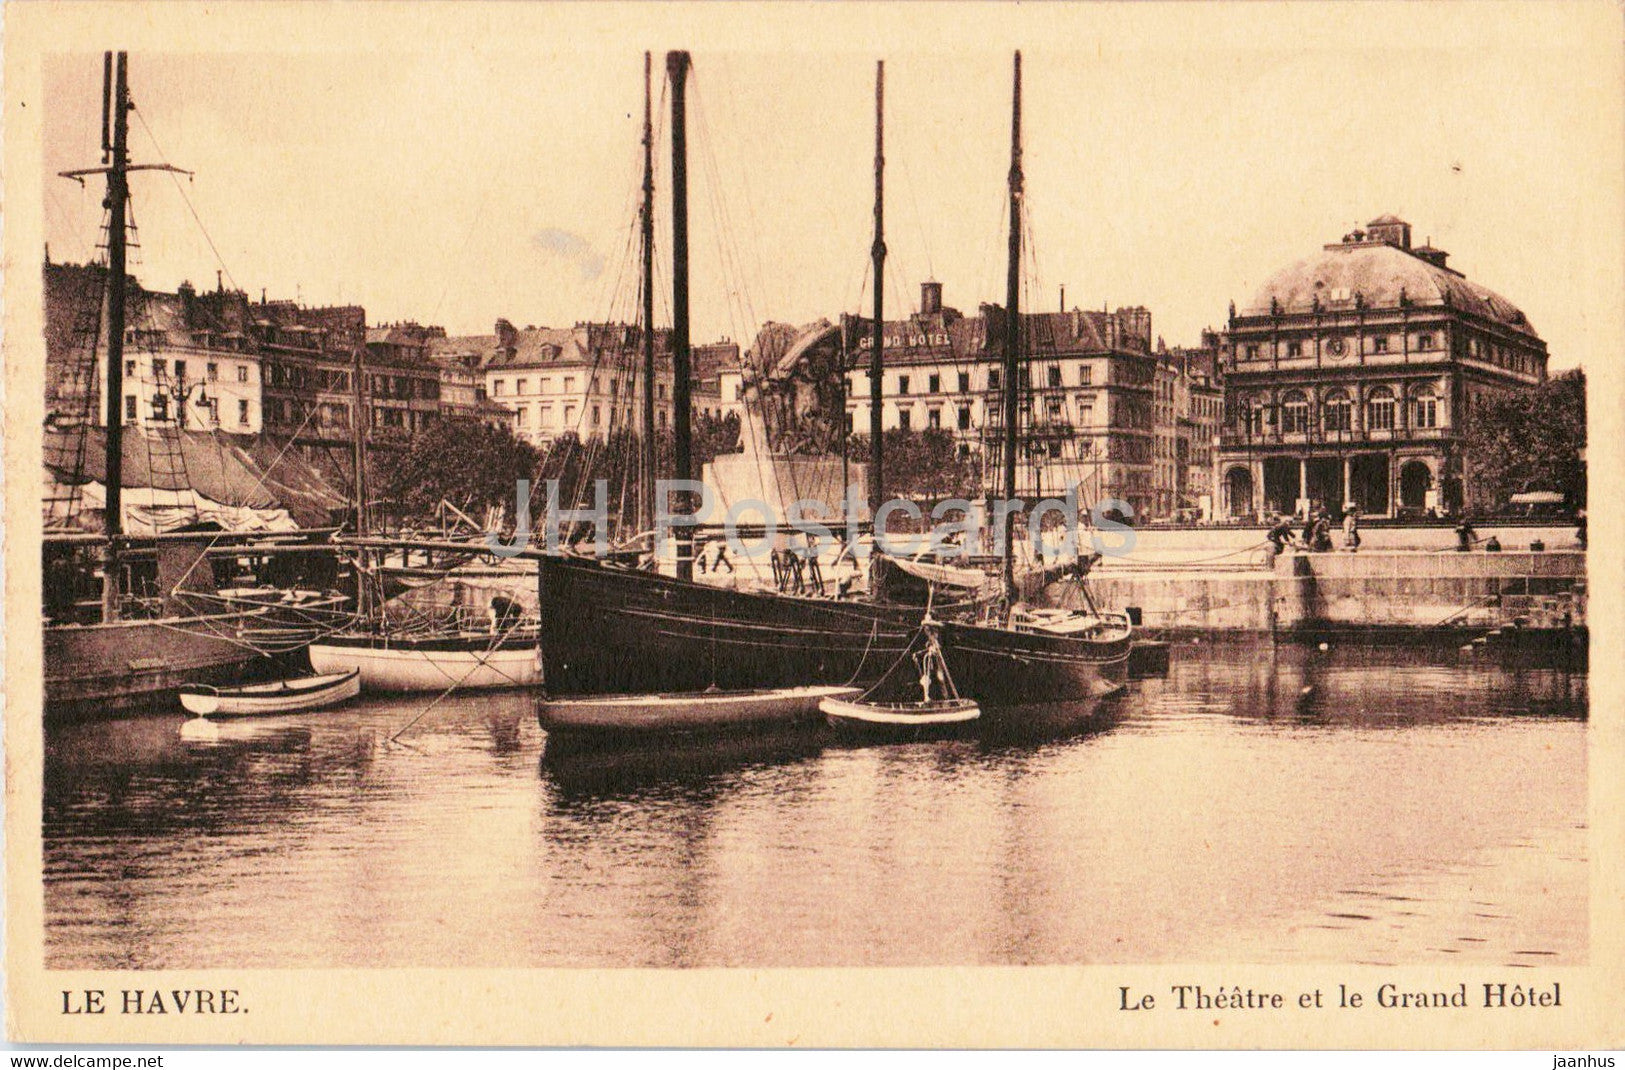 Le Havre - Le Theatre et le Grand Hotel - ship - boat - old postcard - 1940 - France - used - JH Postcards